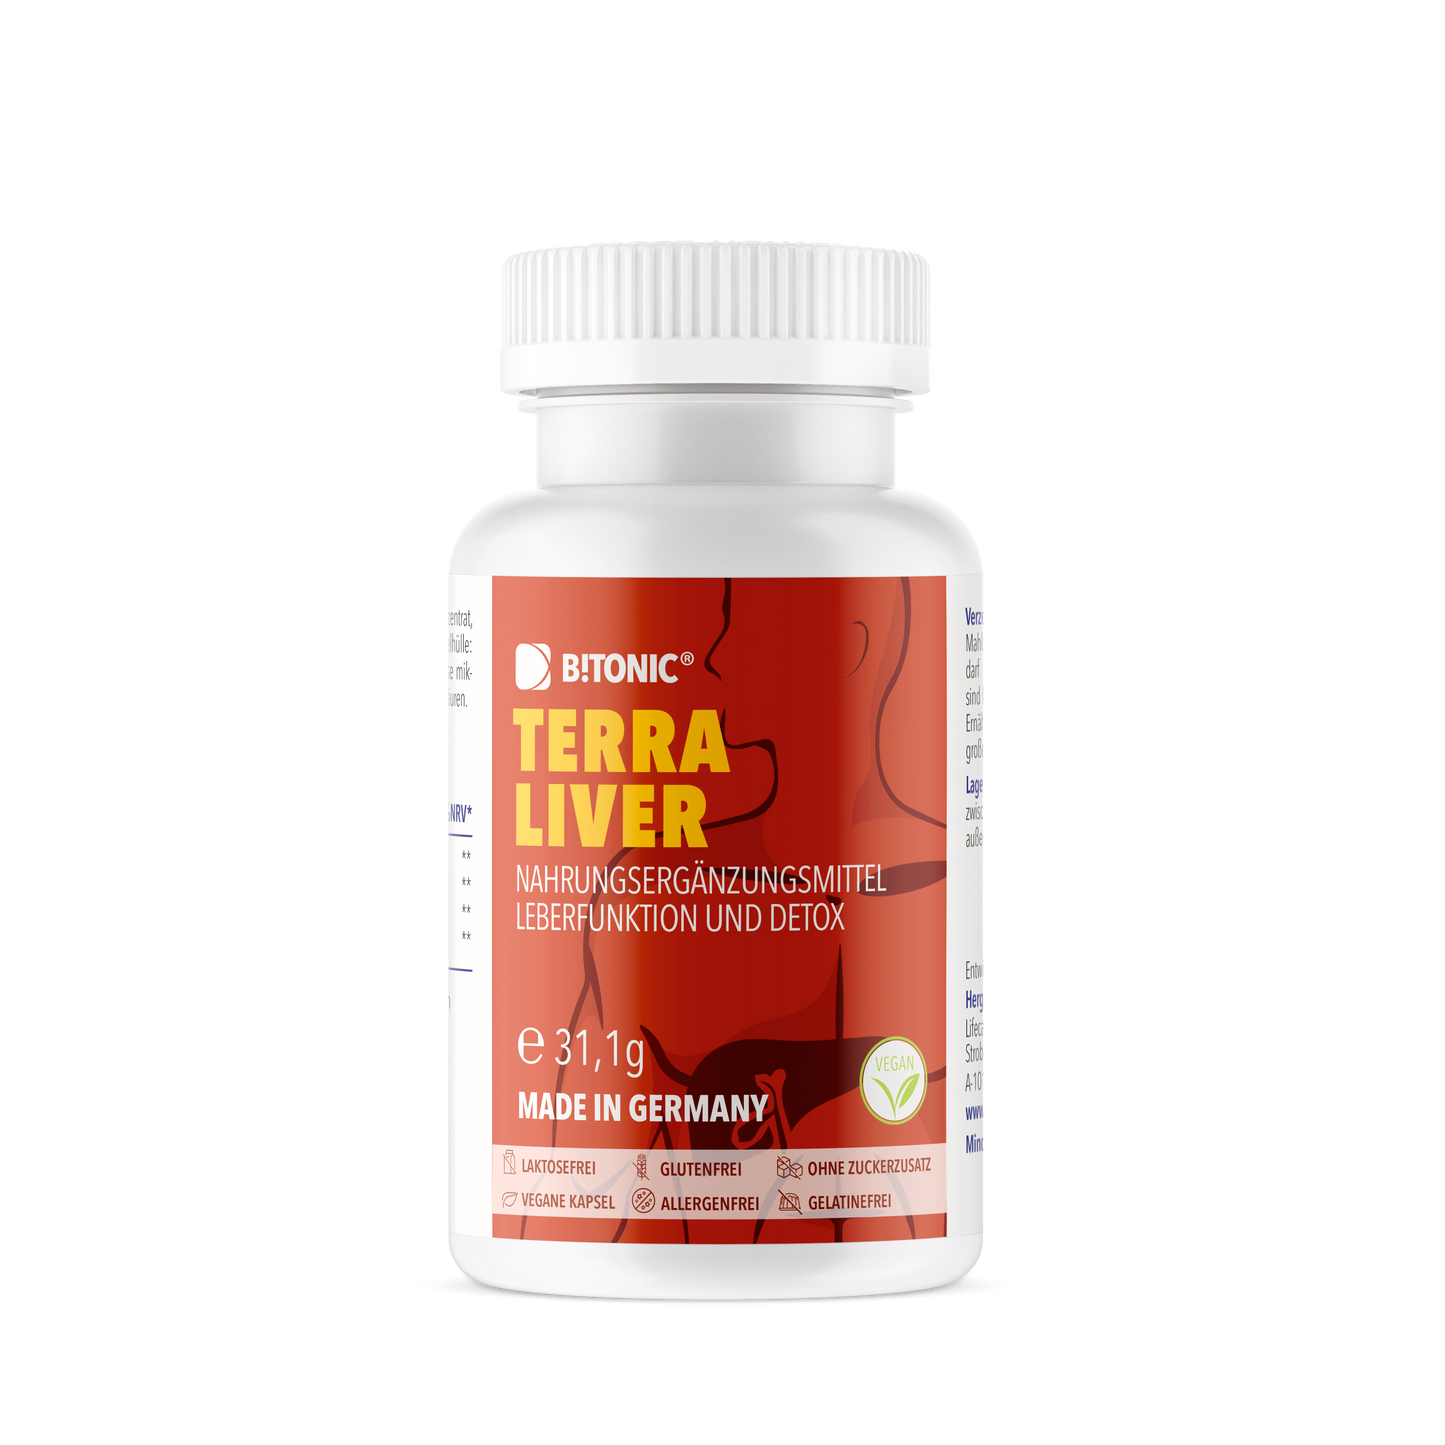 B!TONIC® Terra Liver - Natürlicher Leber-Komplex